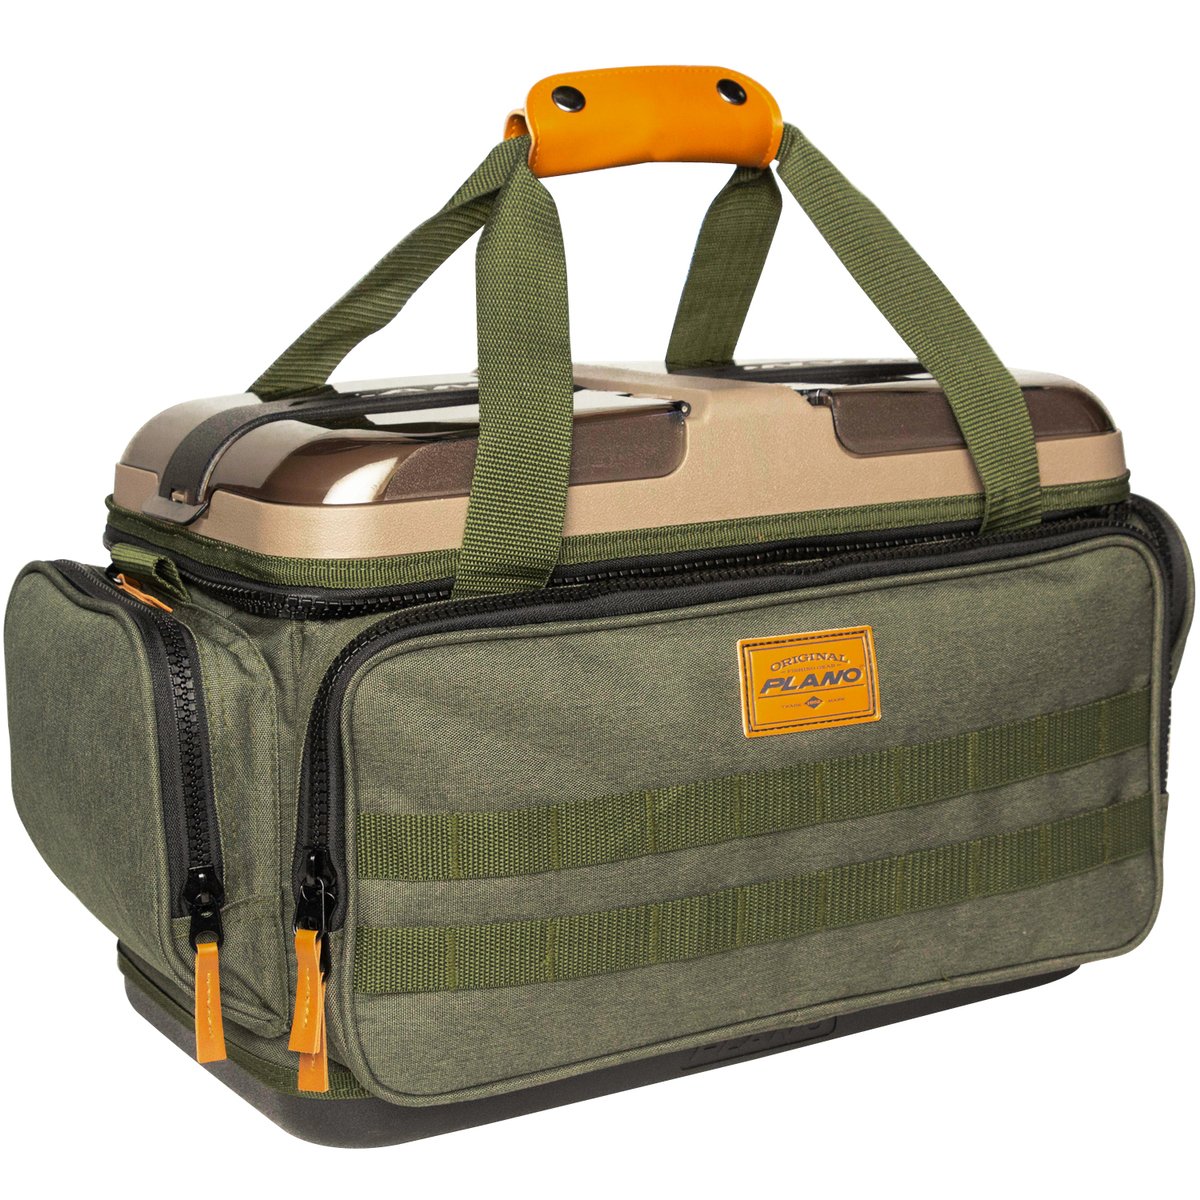  Okeechobee Fats Medium Fishing Gear Tackle Bag Soft Sided  Fishing Bag, Includes 2 Fishing Accessories Utility Boxes, Top Loading  Fishing Tackle Box Bag